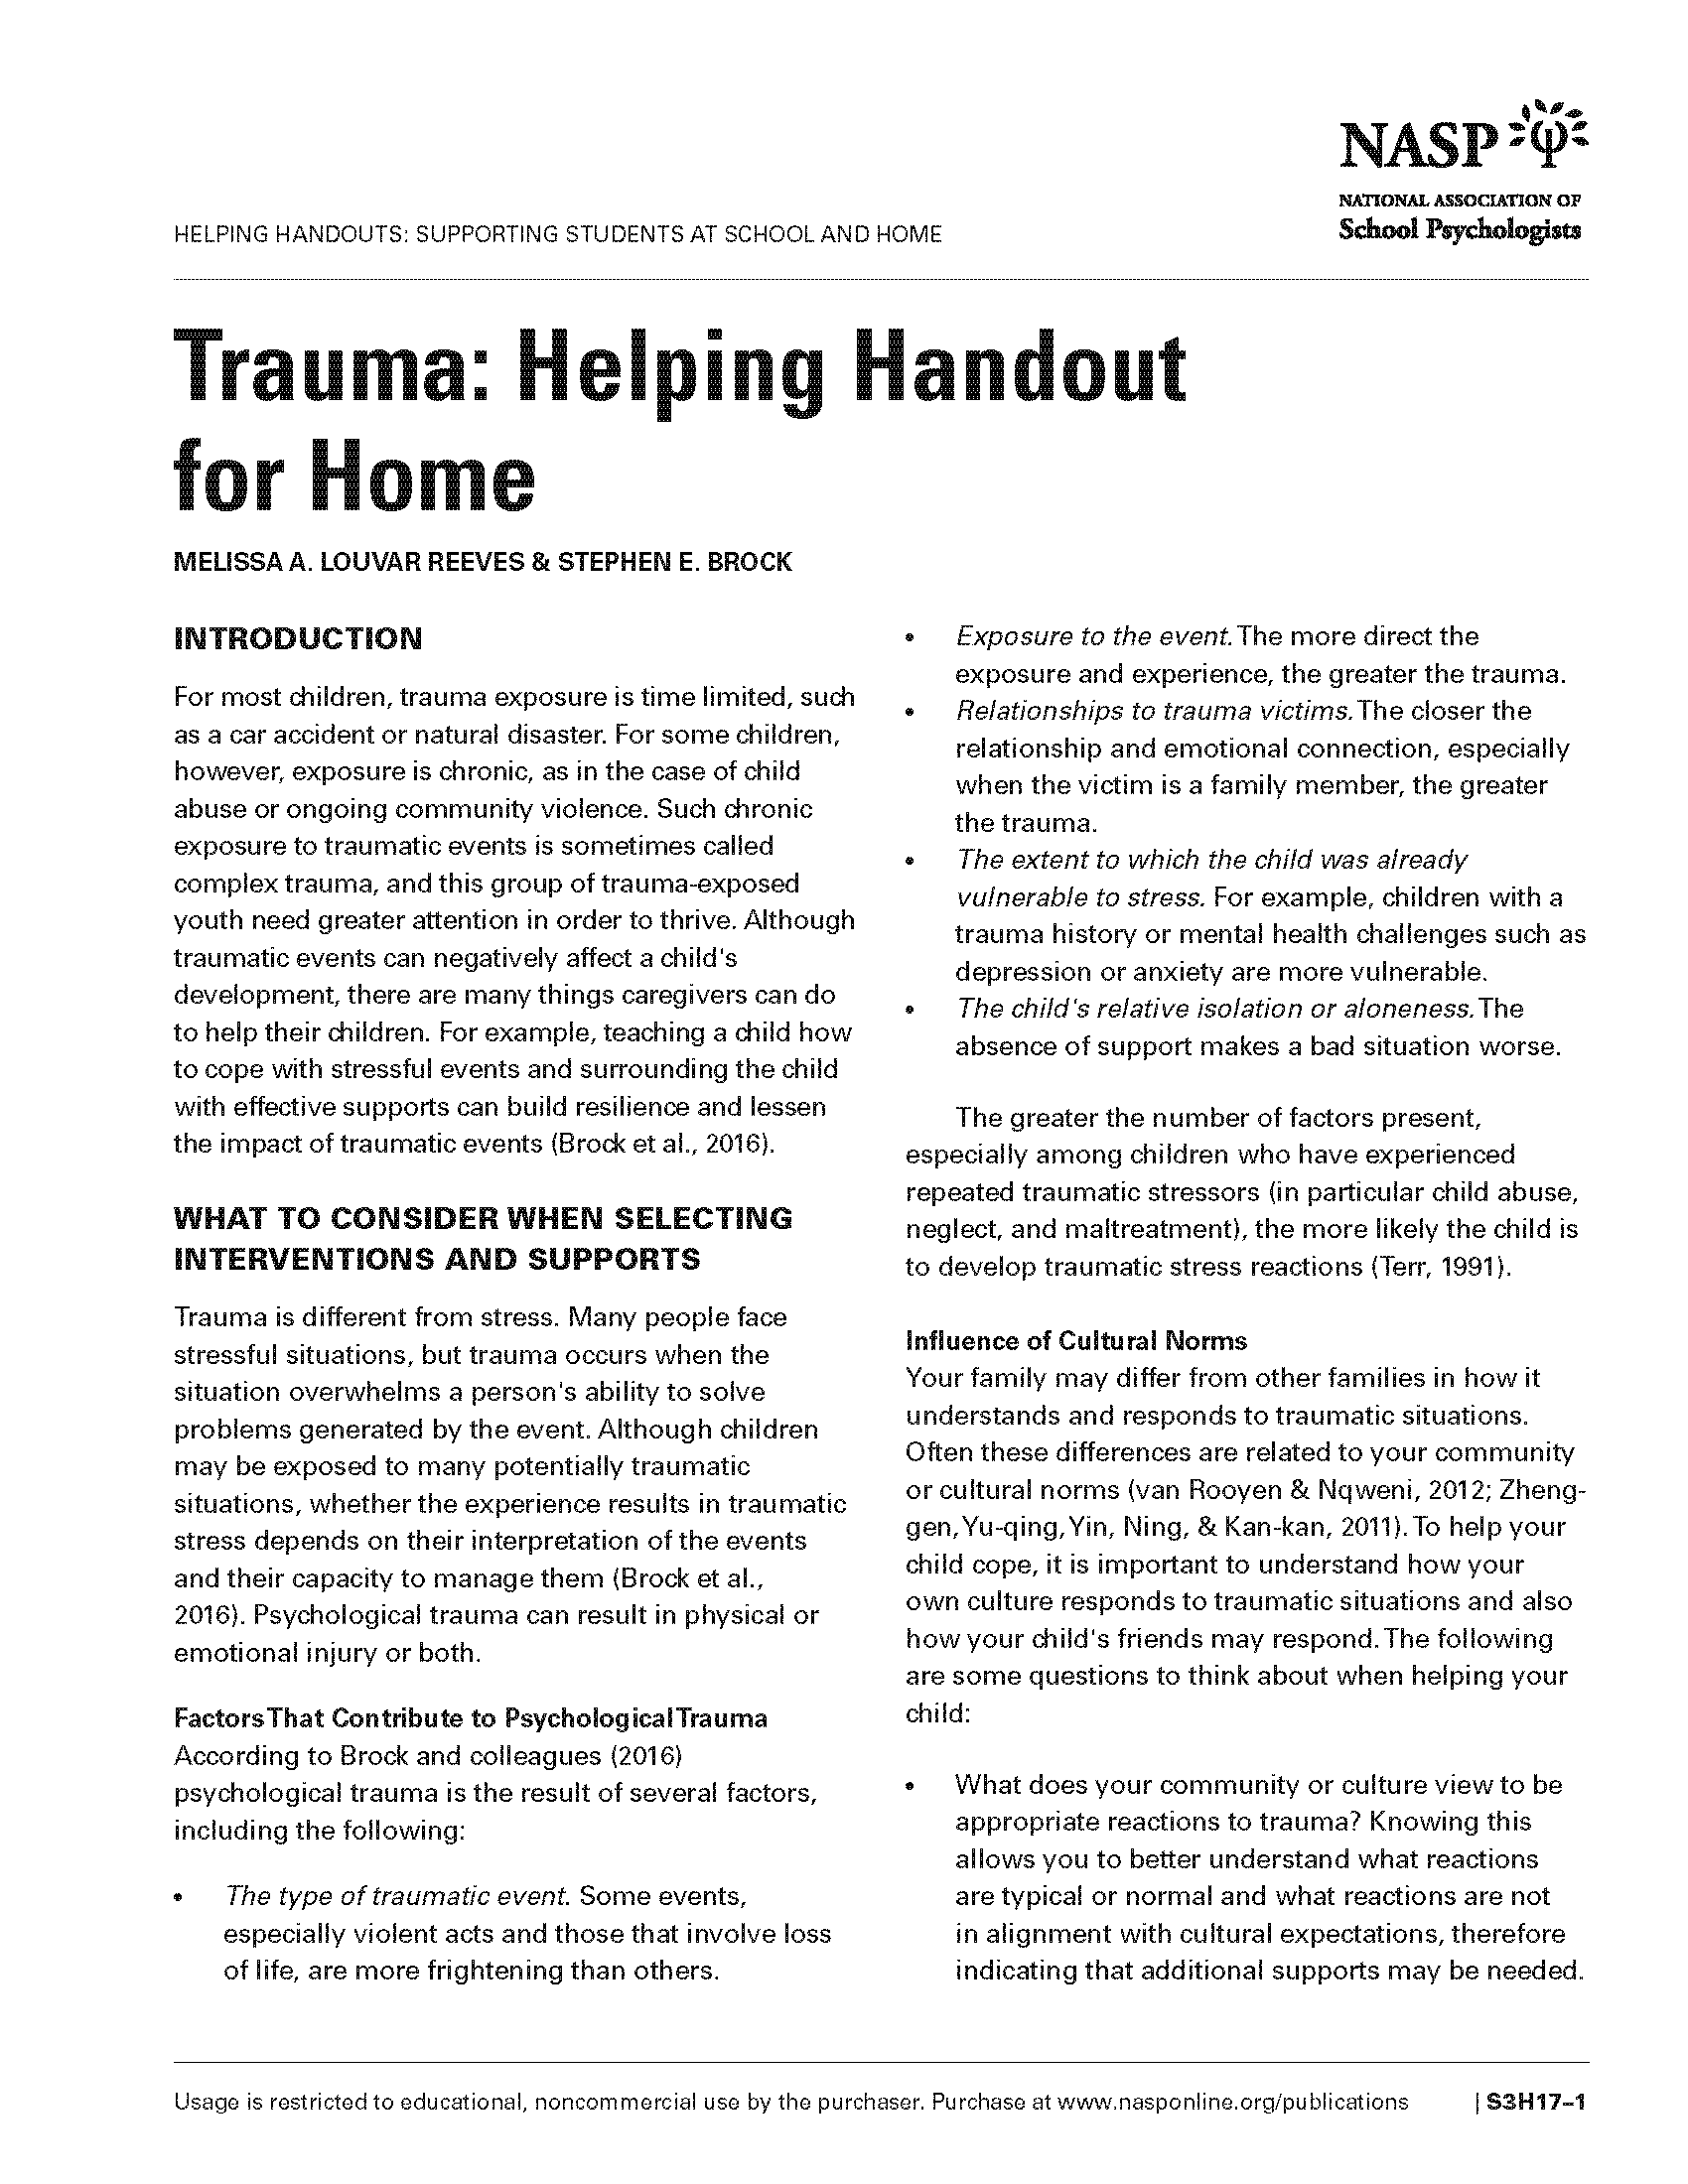 Trauma: Helping Handout for Home  